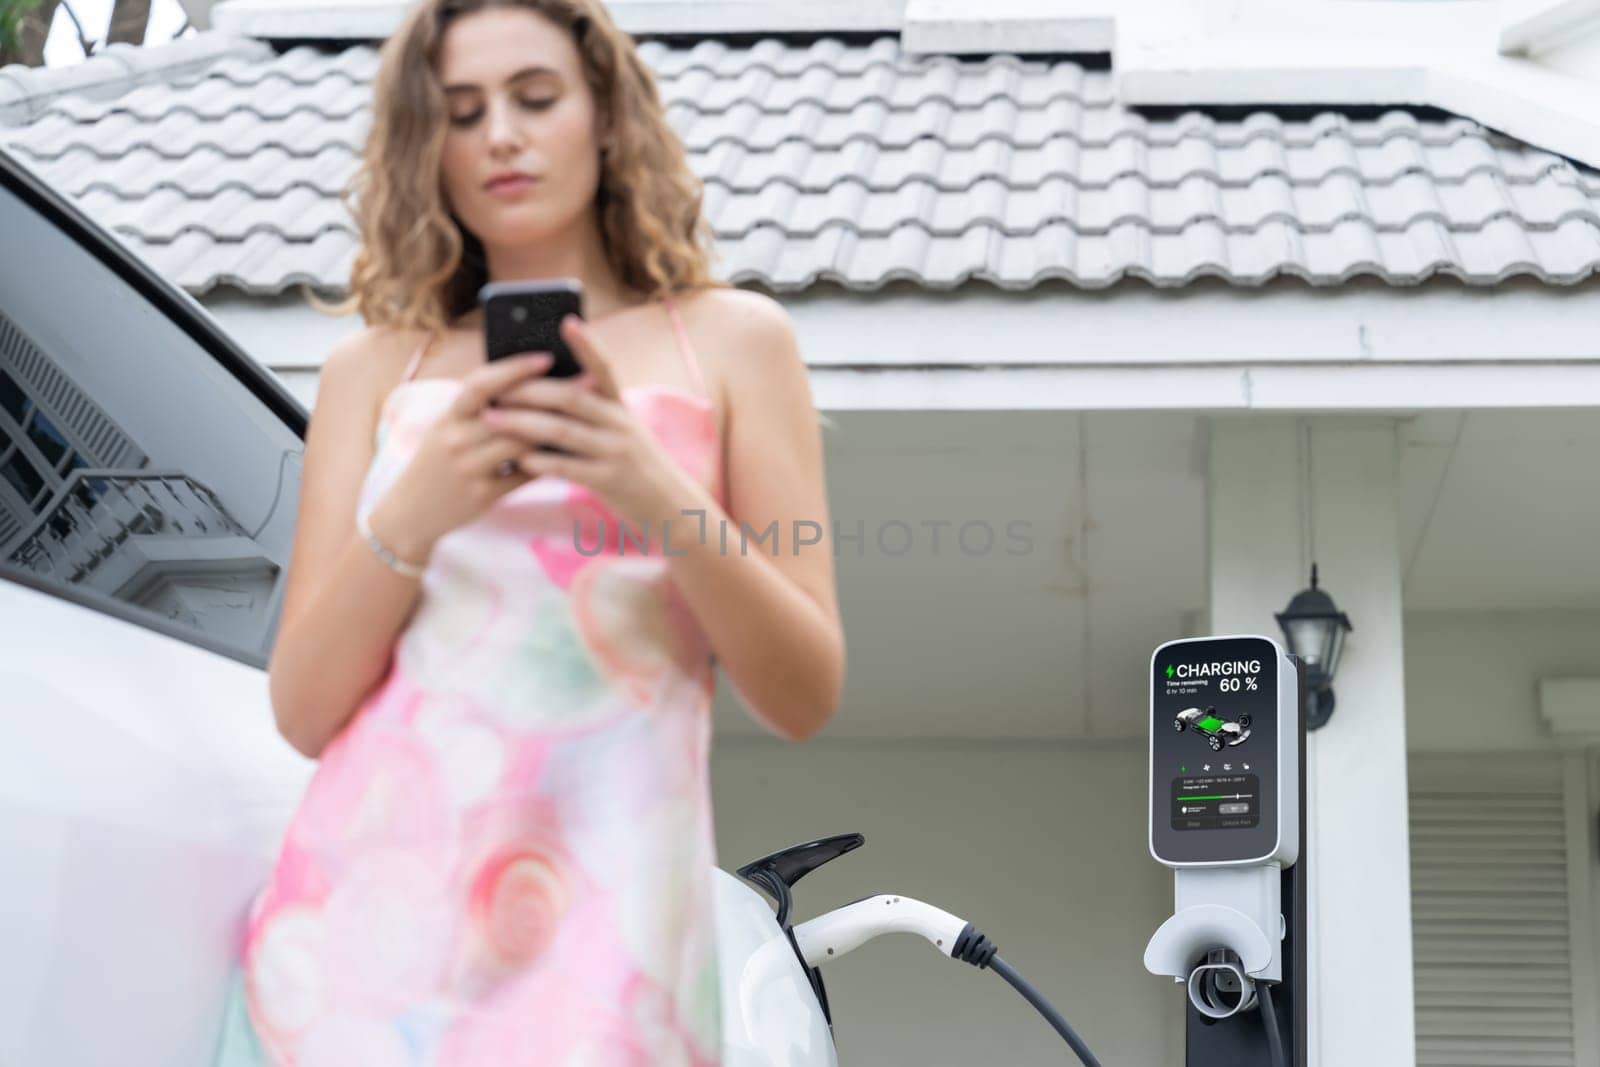 Focused home EV charging station on blurred background. Synchronos by biancoblue